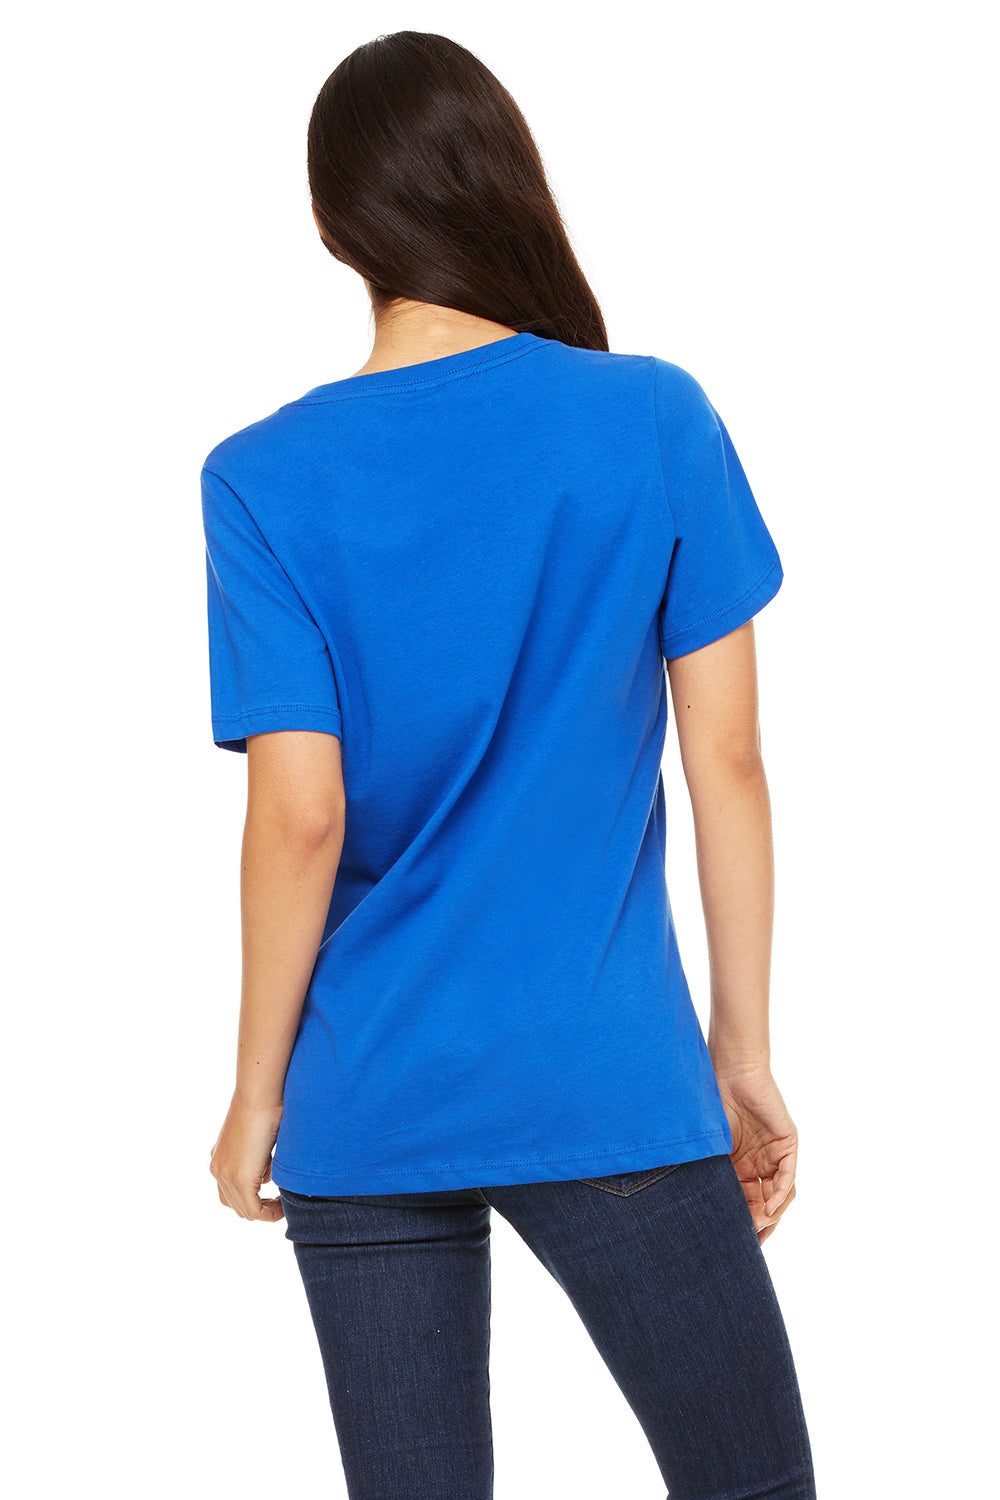 Bella + Canvas BC6405/6405 Womens Relaxed Jersey Short Sleeve V-Neck T-Shirt True Royal Blue Model Back